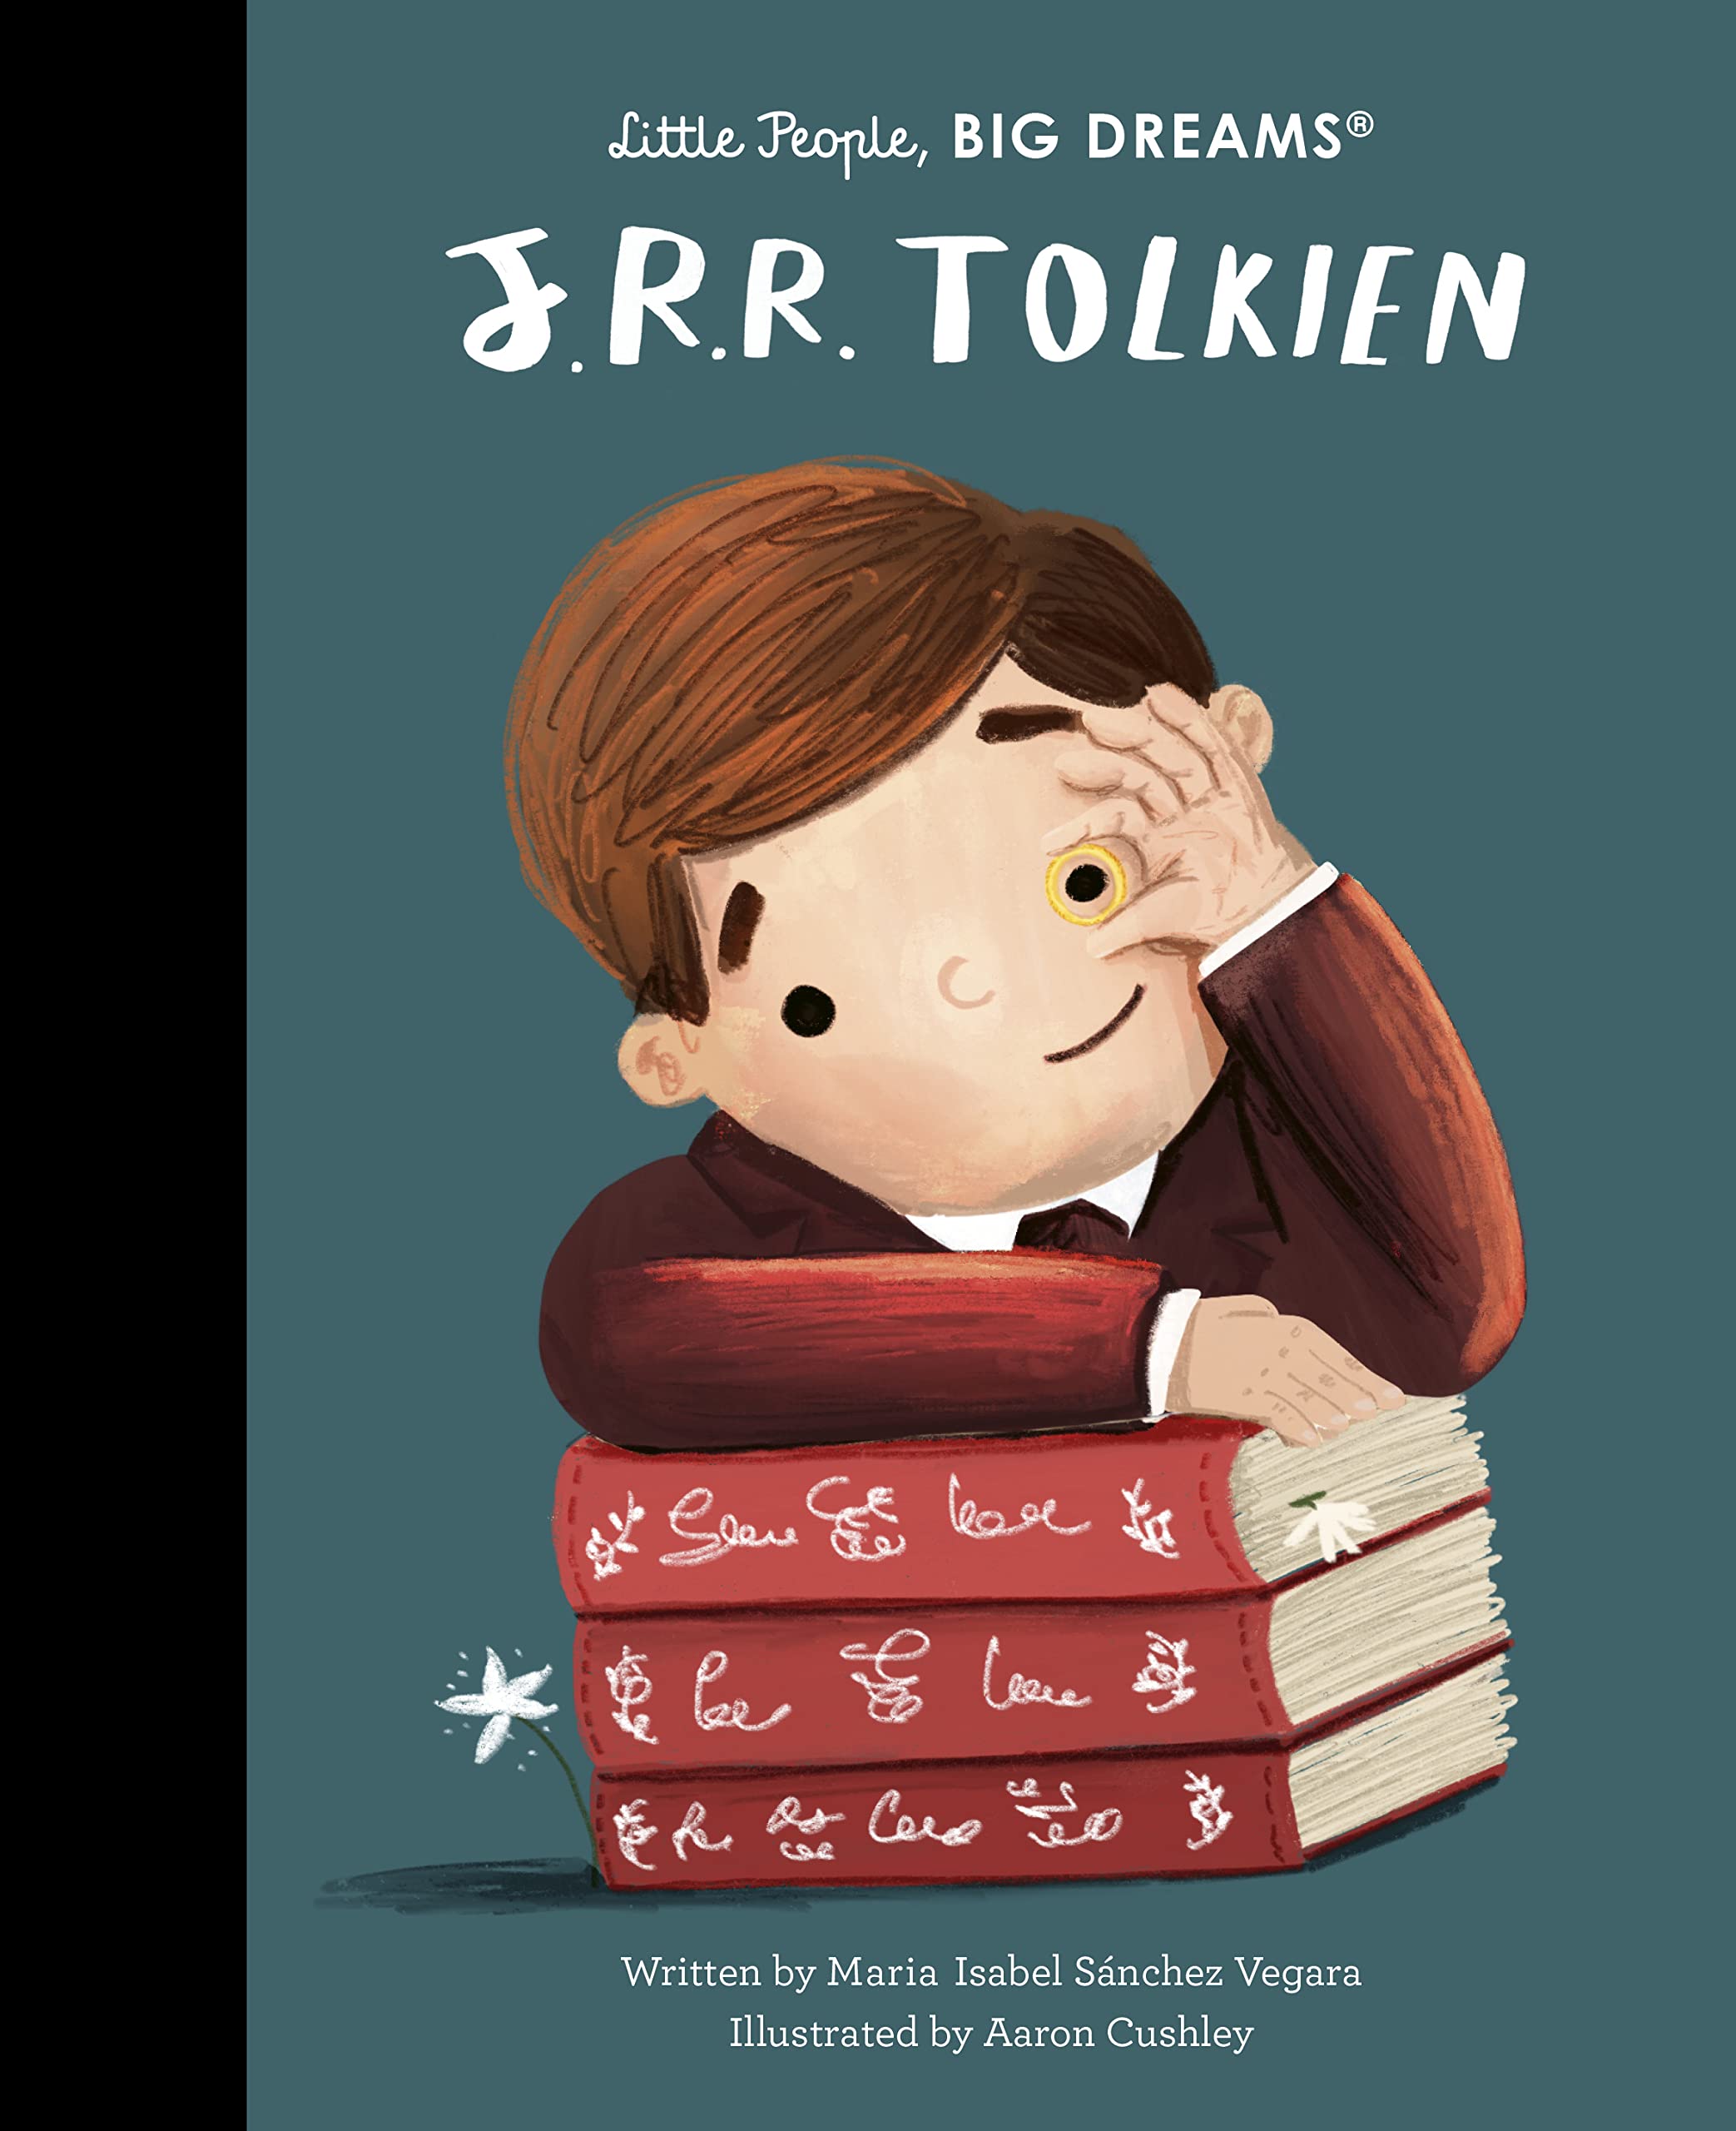 J. R. R. TOLKIEN (Hardcover)